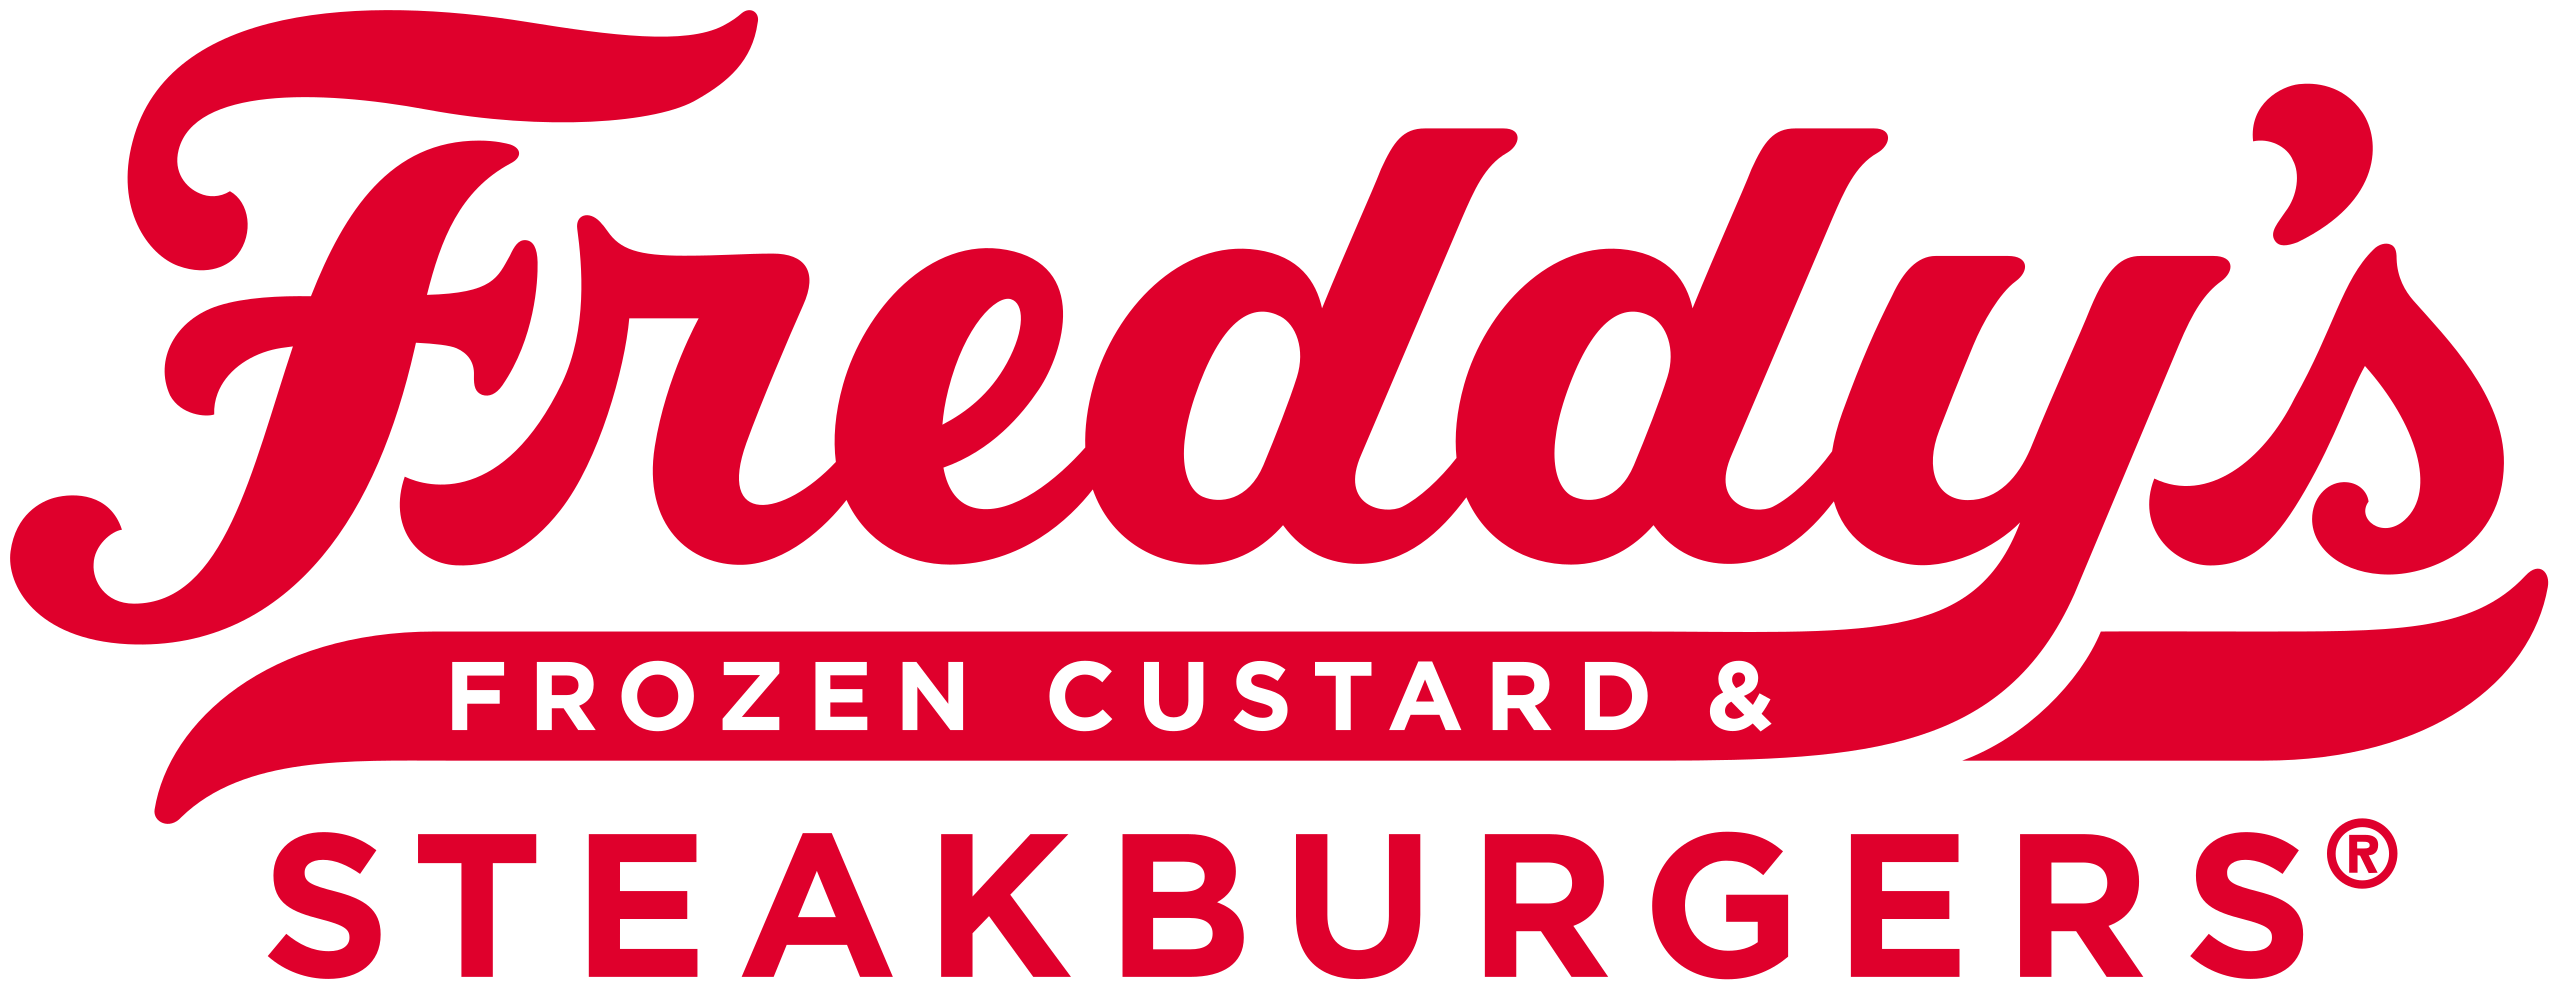 2560px-Freddy's_Frozen_Custard_&_Steakburgers_logo.svg